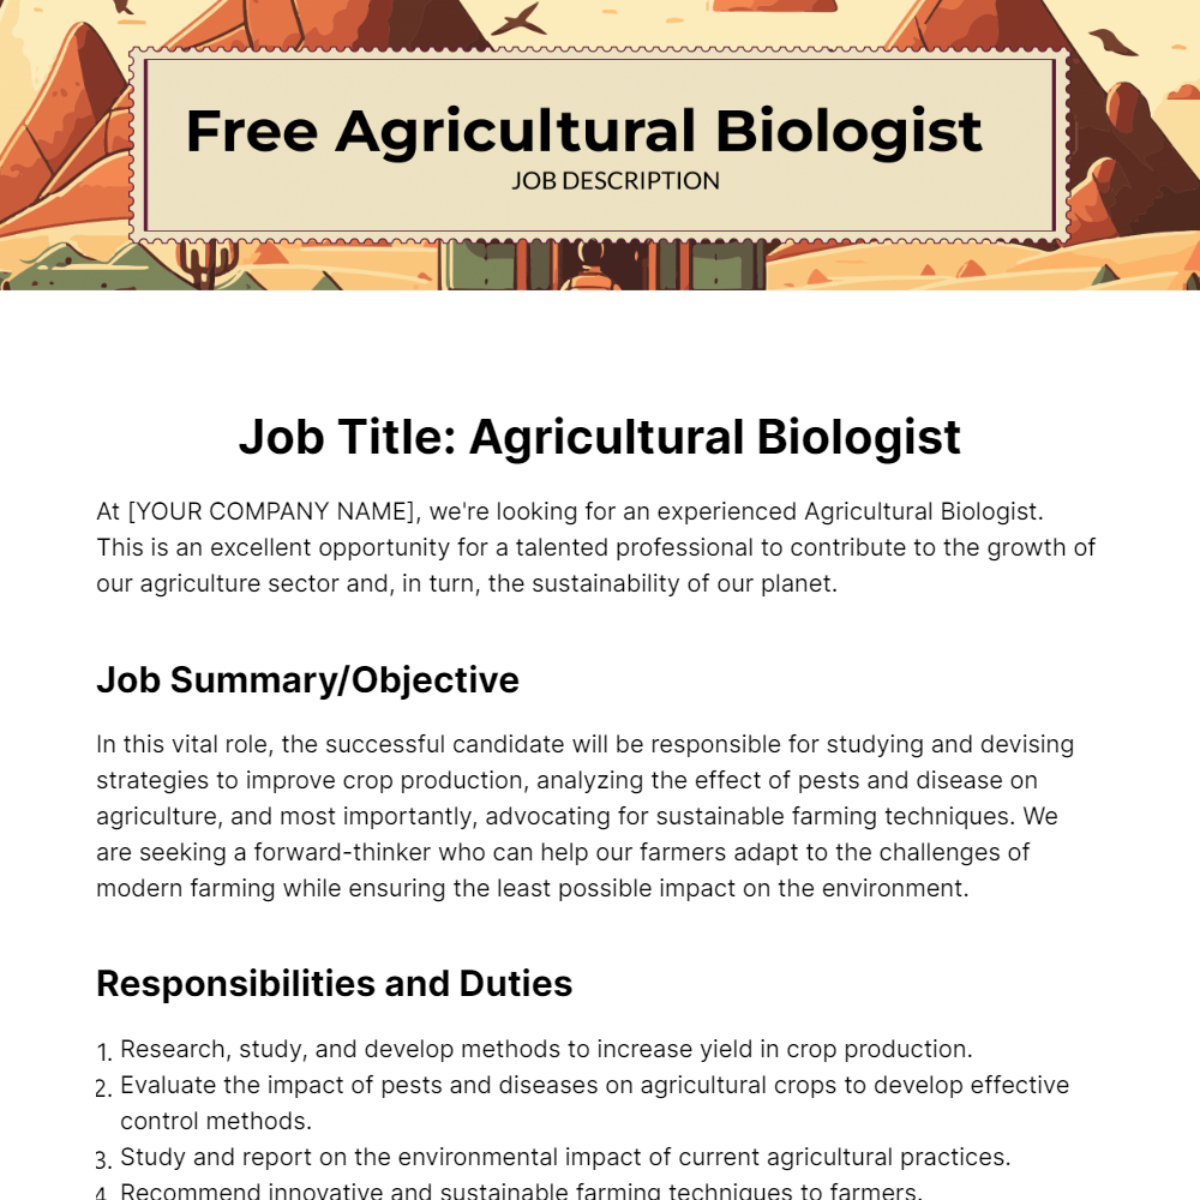 Free Agricultural Biologist Job Description Template